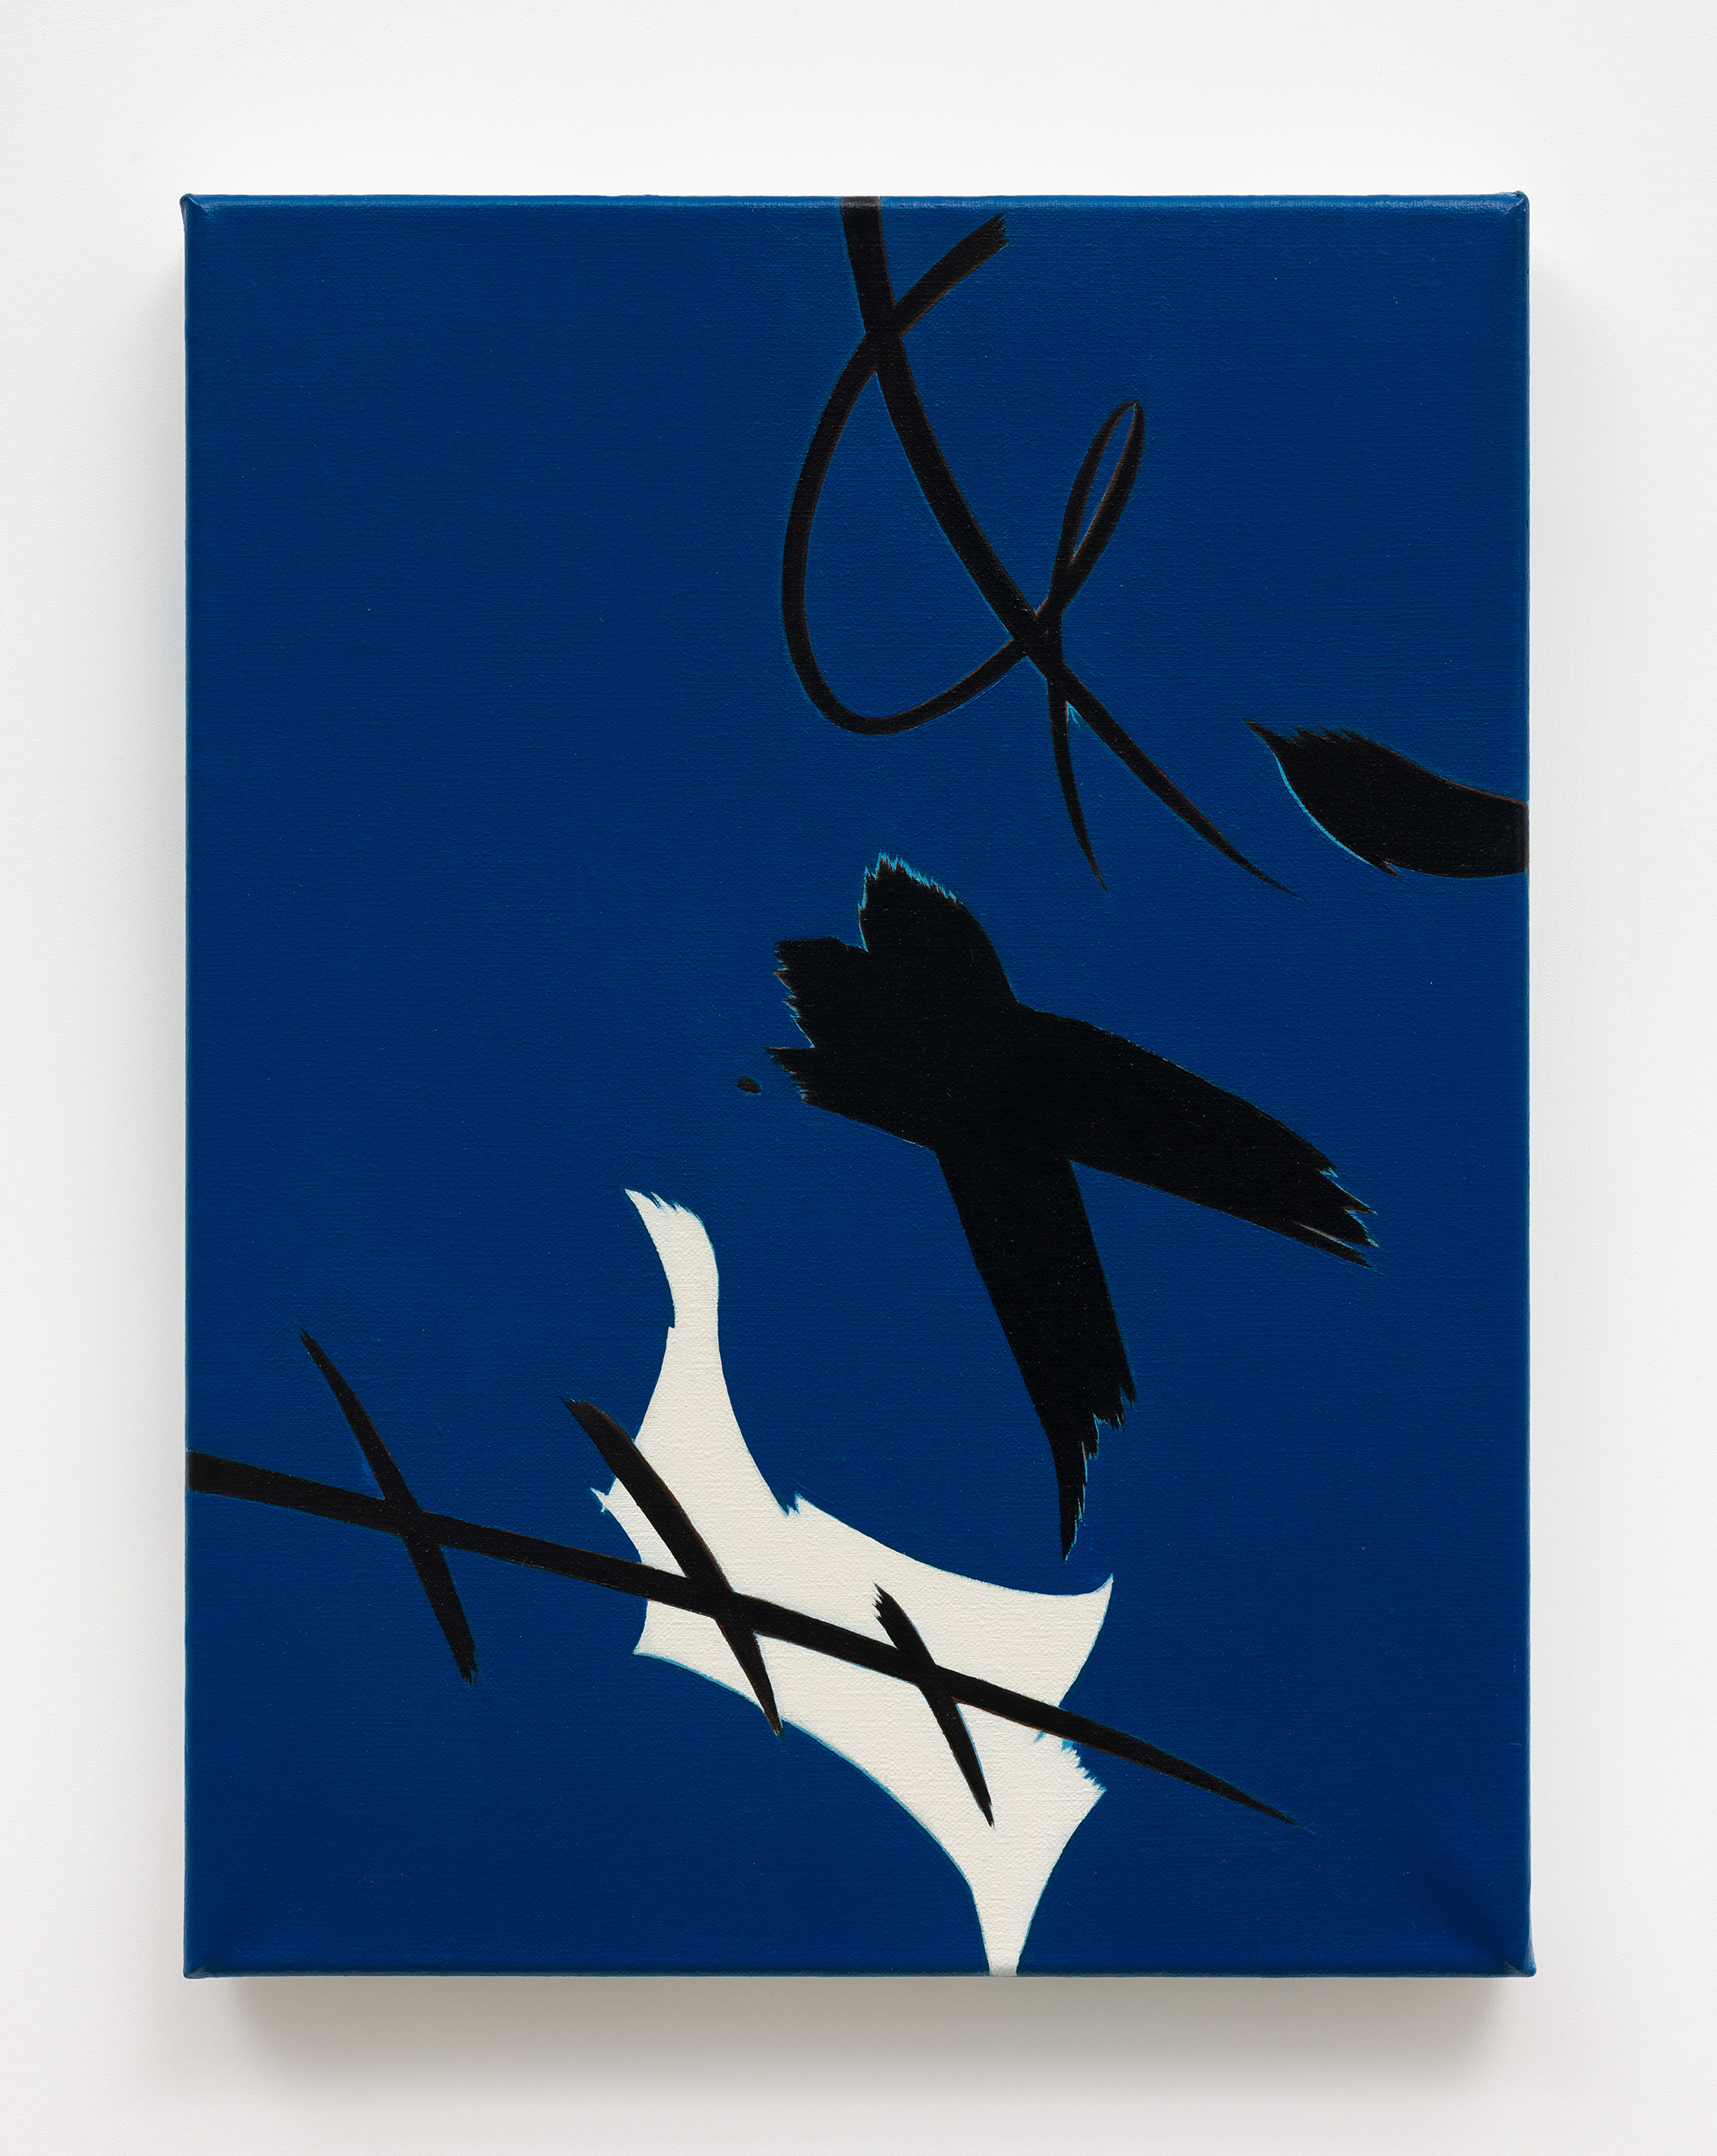 Shi Jiayun, Blue #4, 2022, Oil on linen, 40 x 30 cm, 15 3/4 x 11 3/4 in.